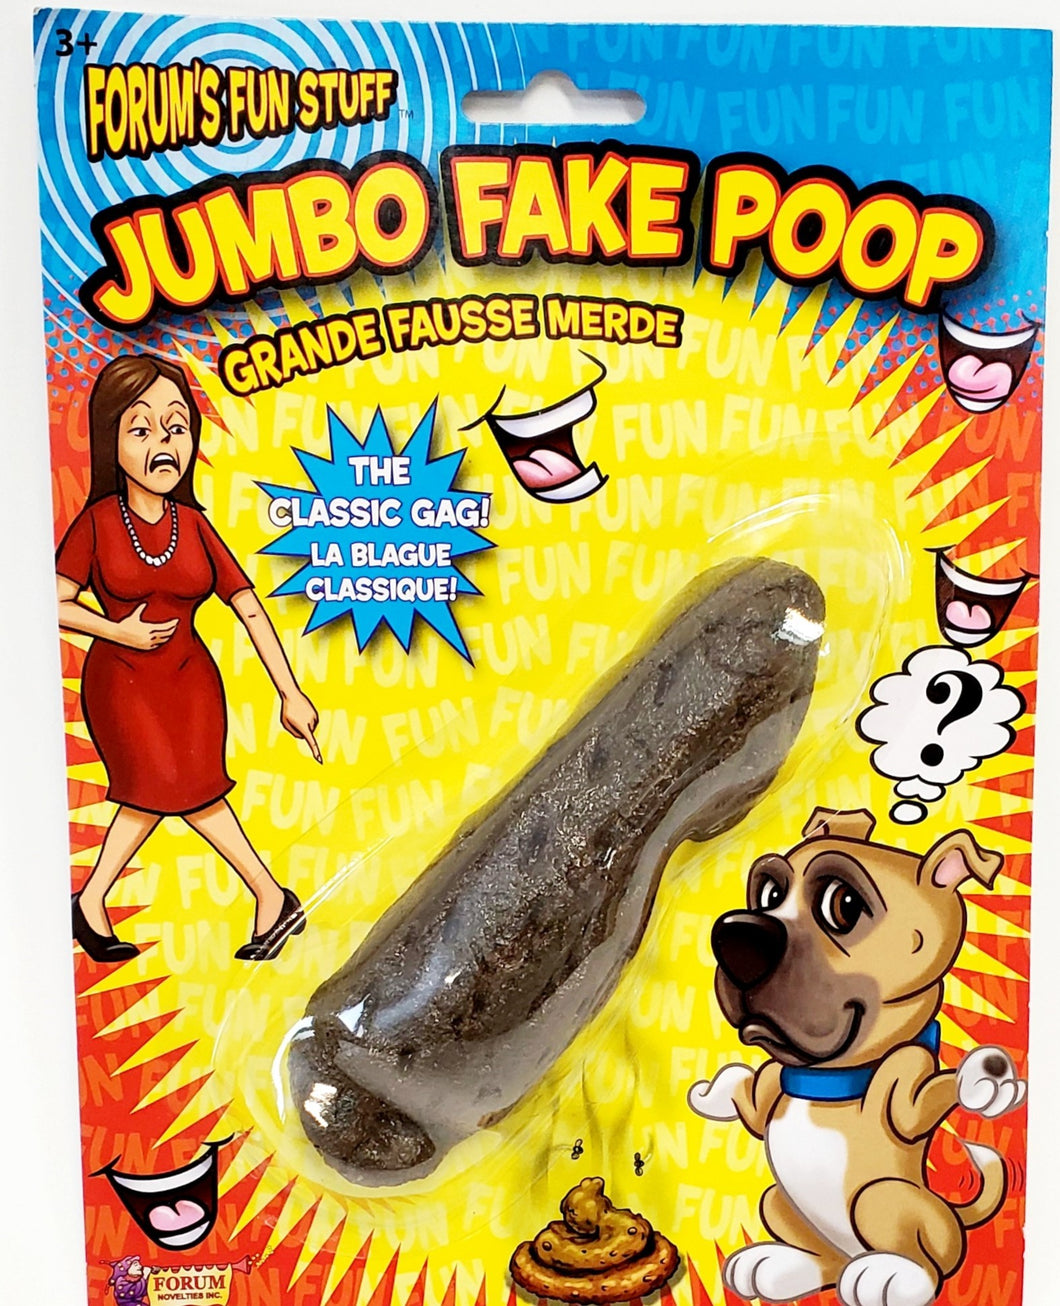 Jumbo Fake Poop - Jokes, Gags, Pranks - Fake Dog Doo - Very Realistic!